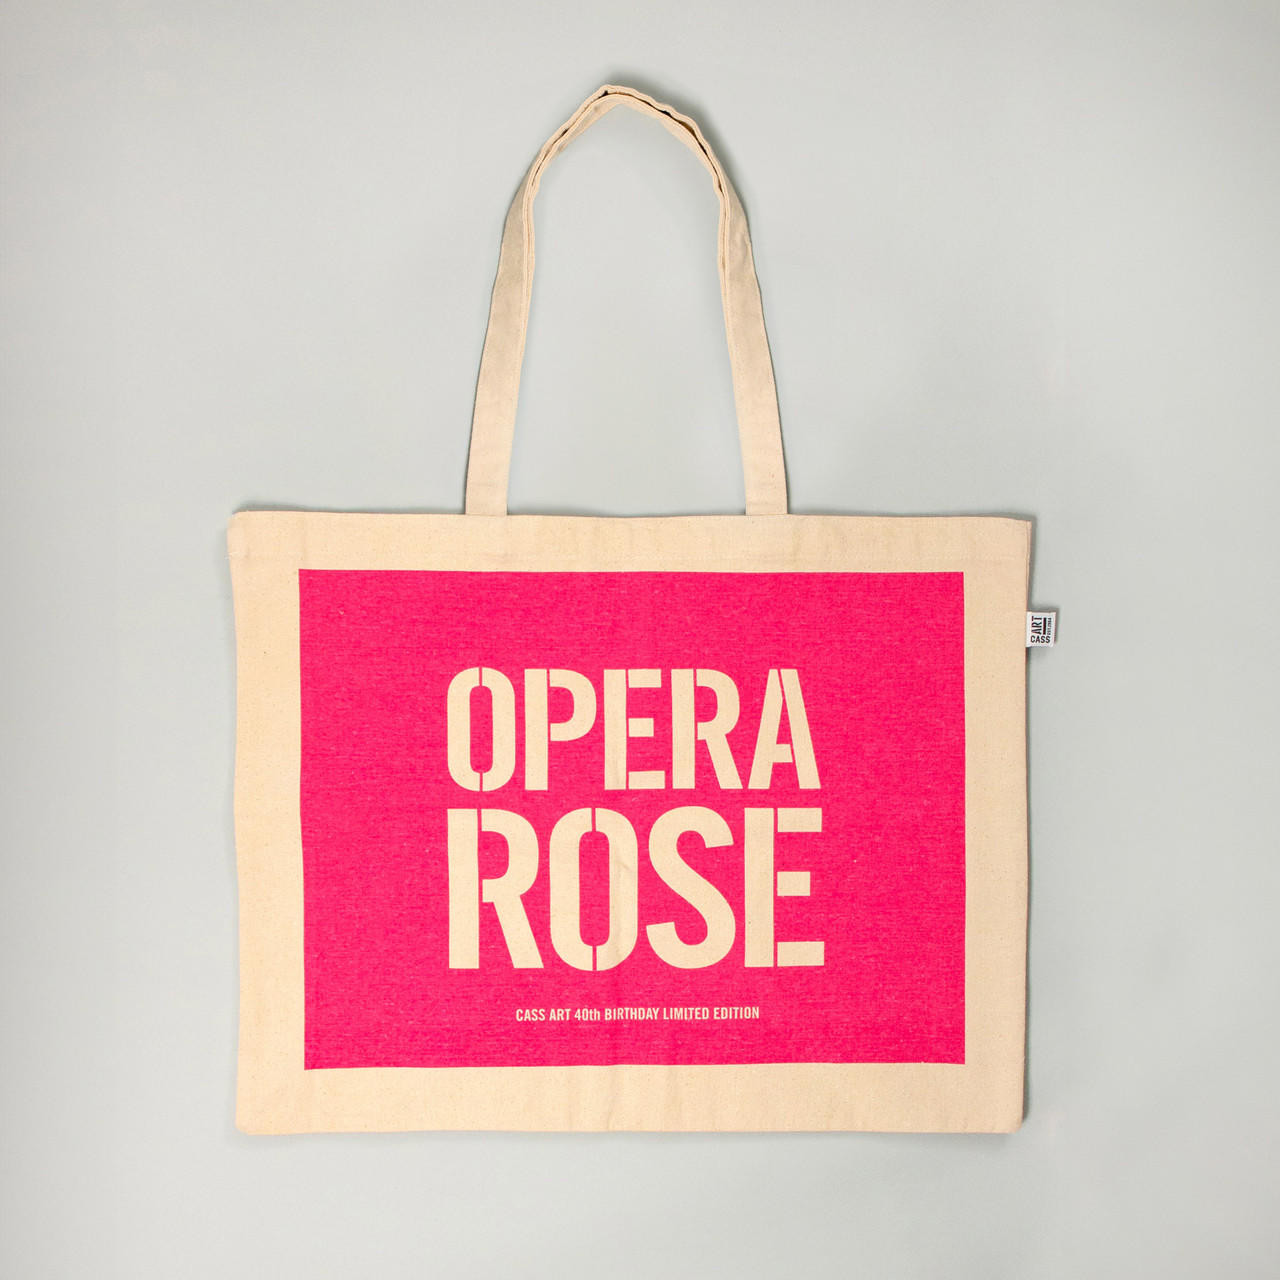 Cass Art 40th Anniversary Canvas Tote Bag Opera Rose